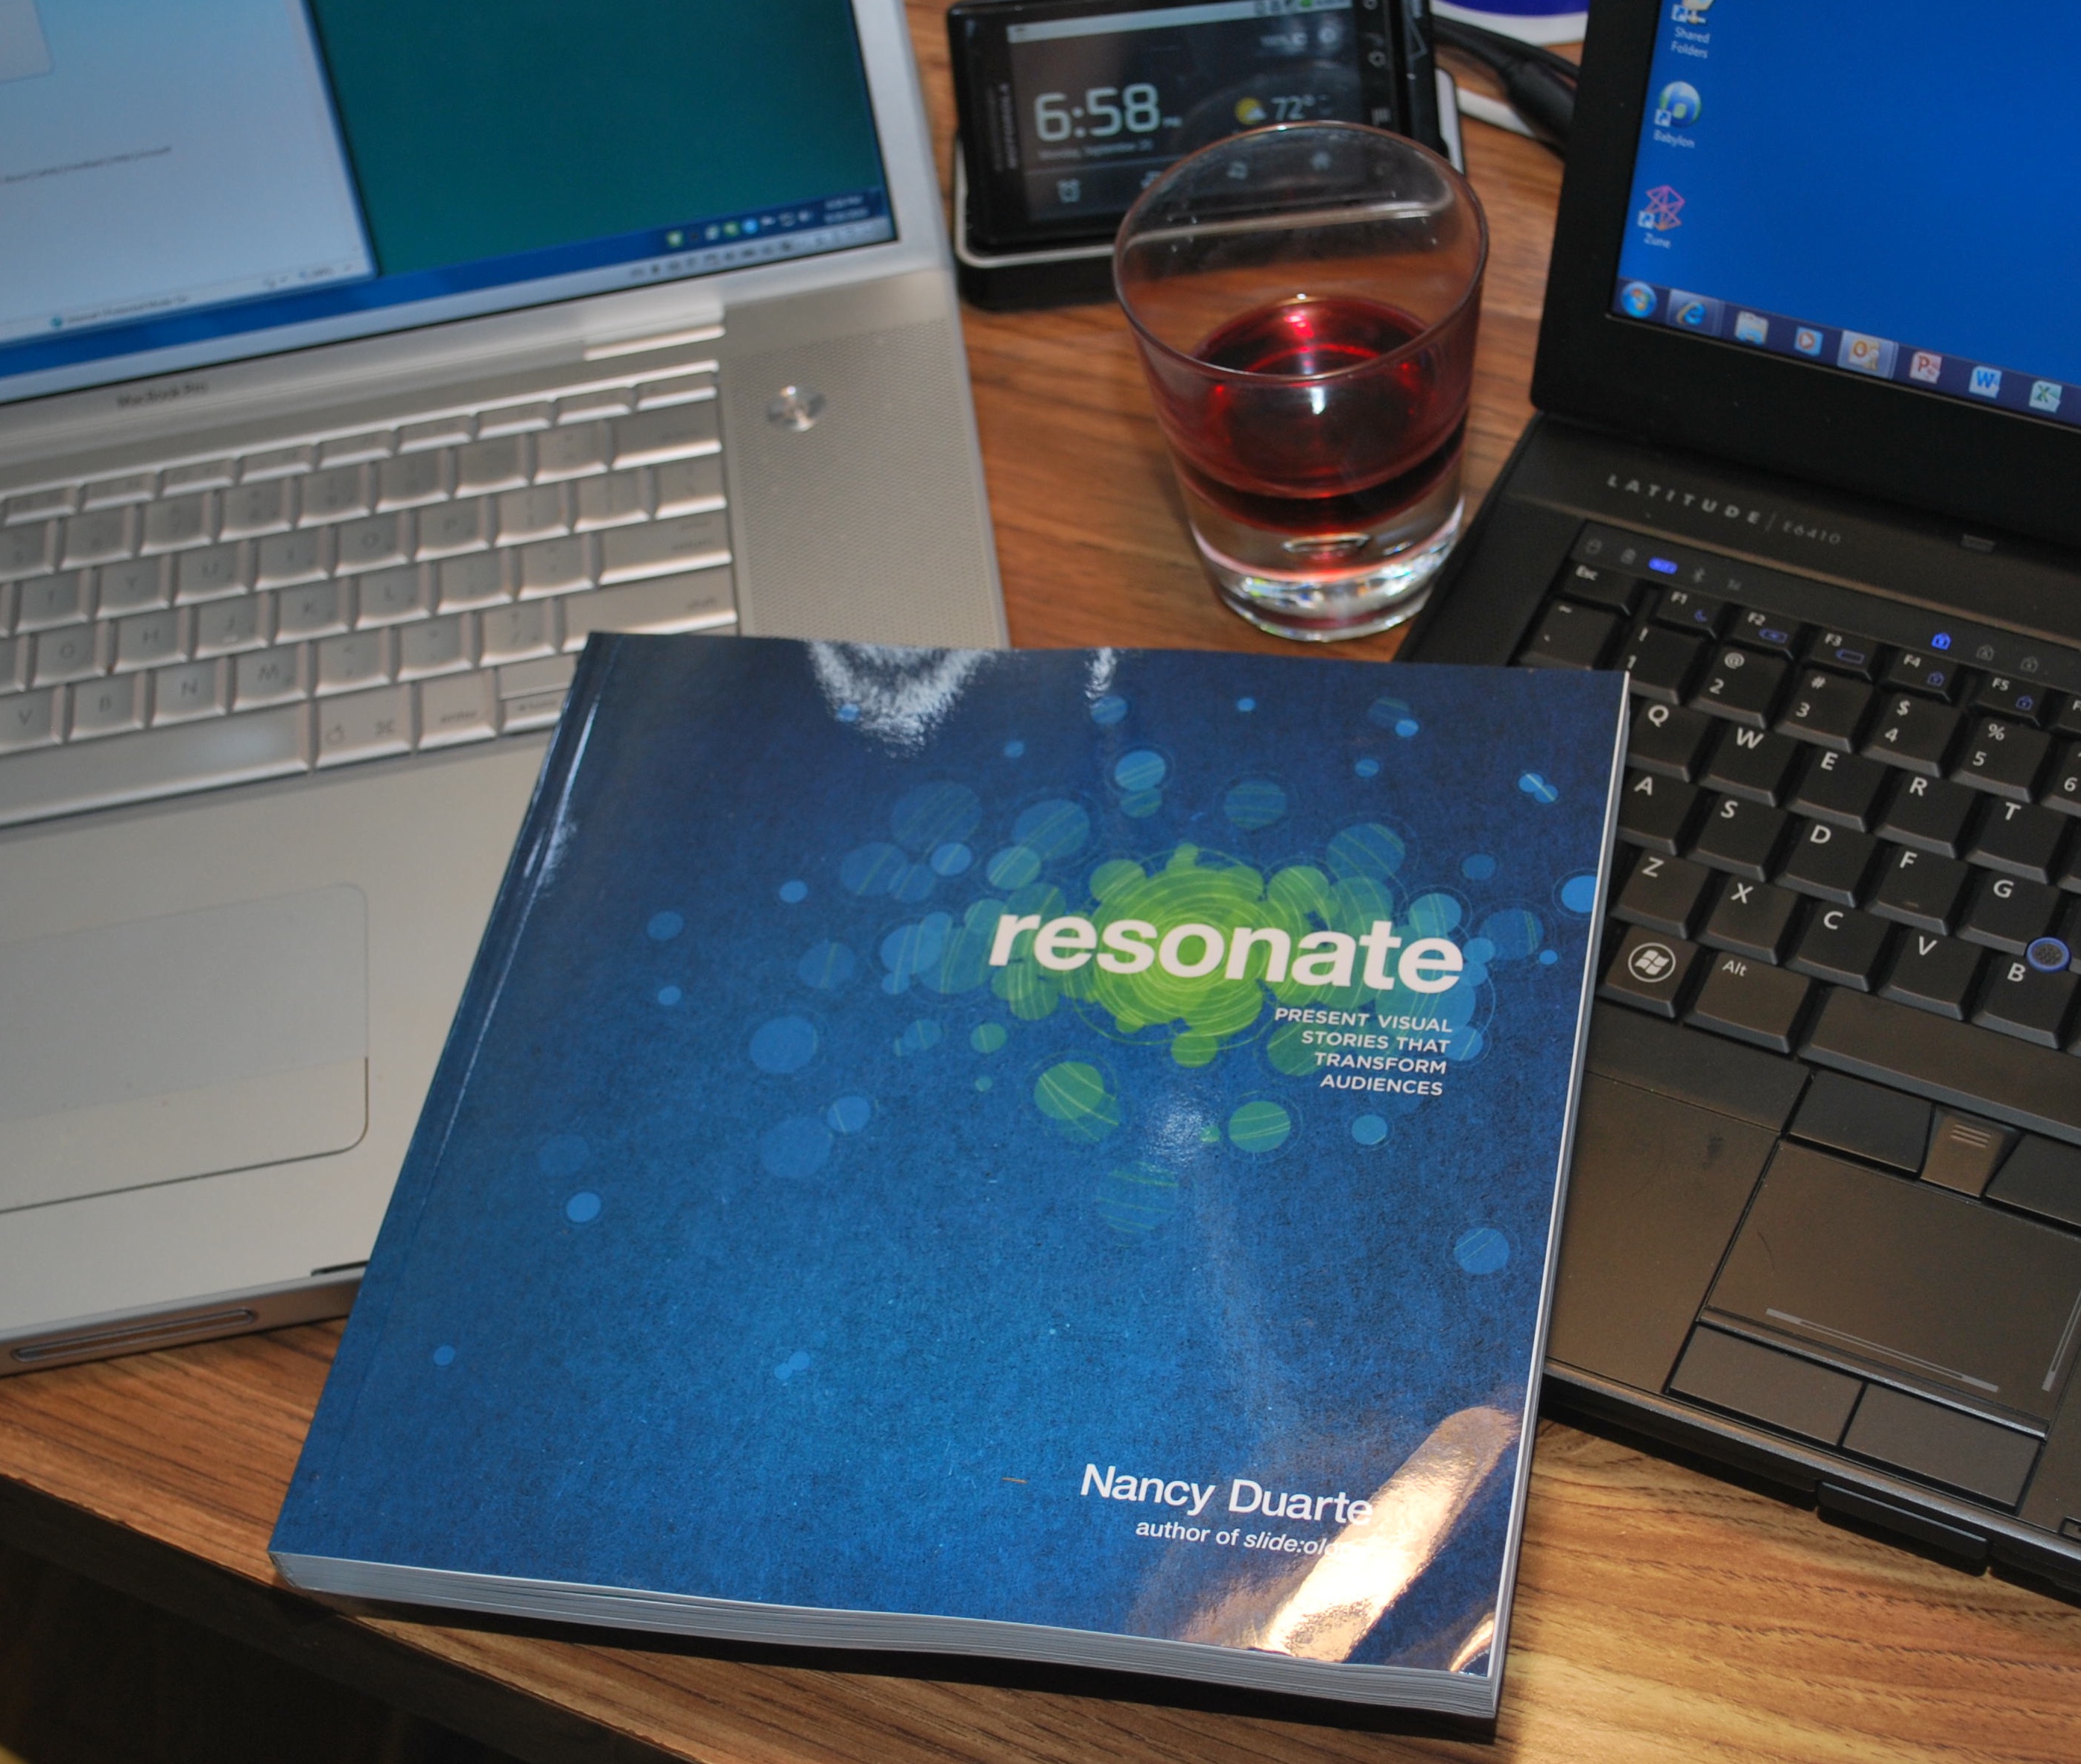 Nancy Duarte's new book Resonate arrives!